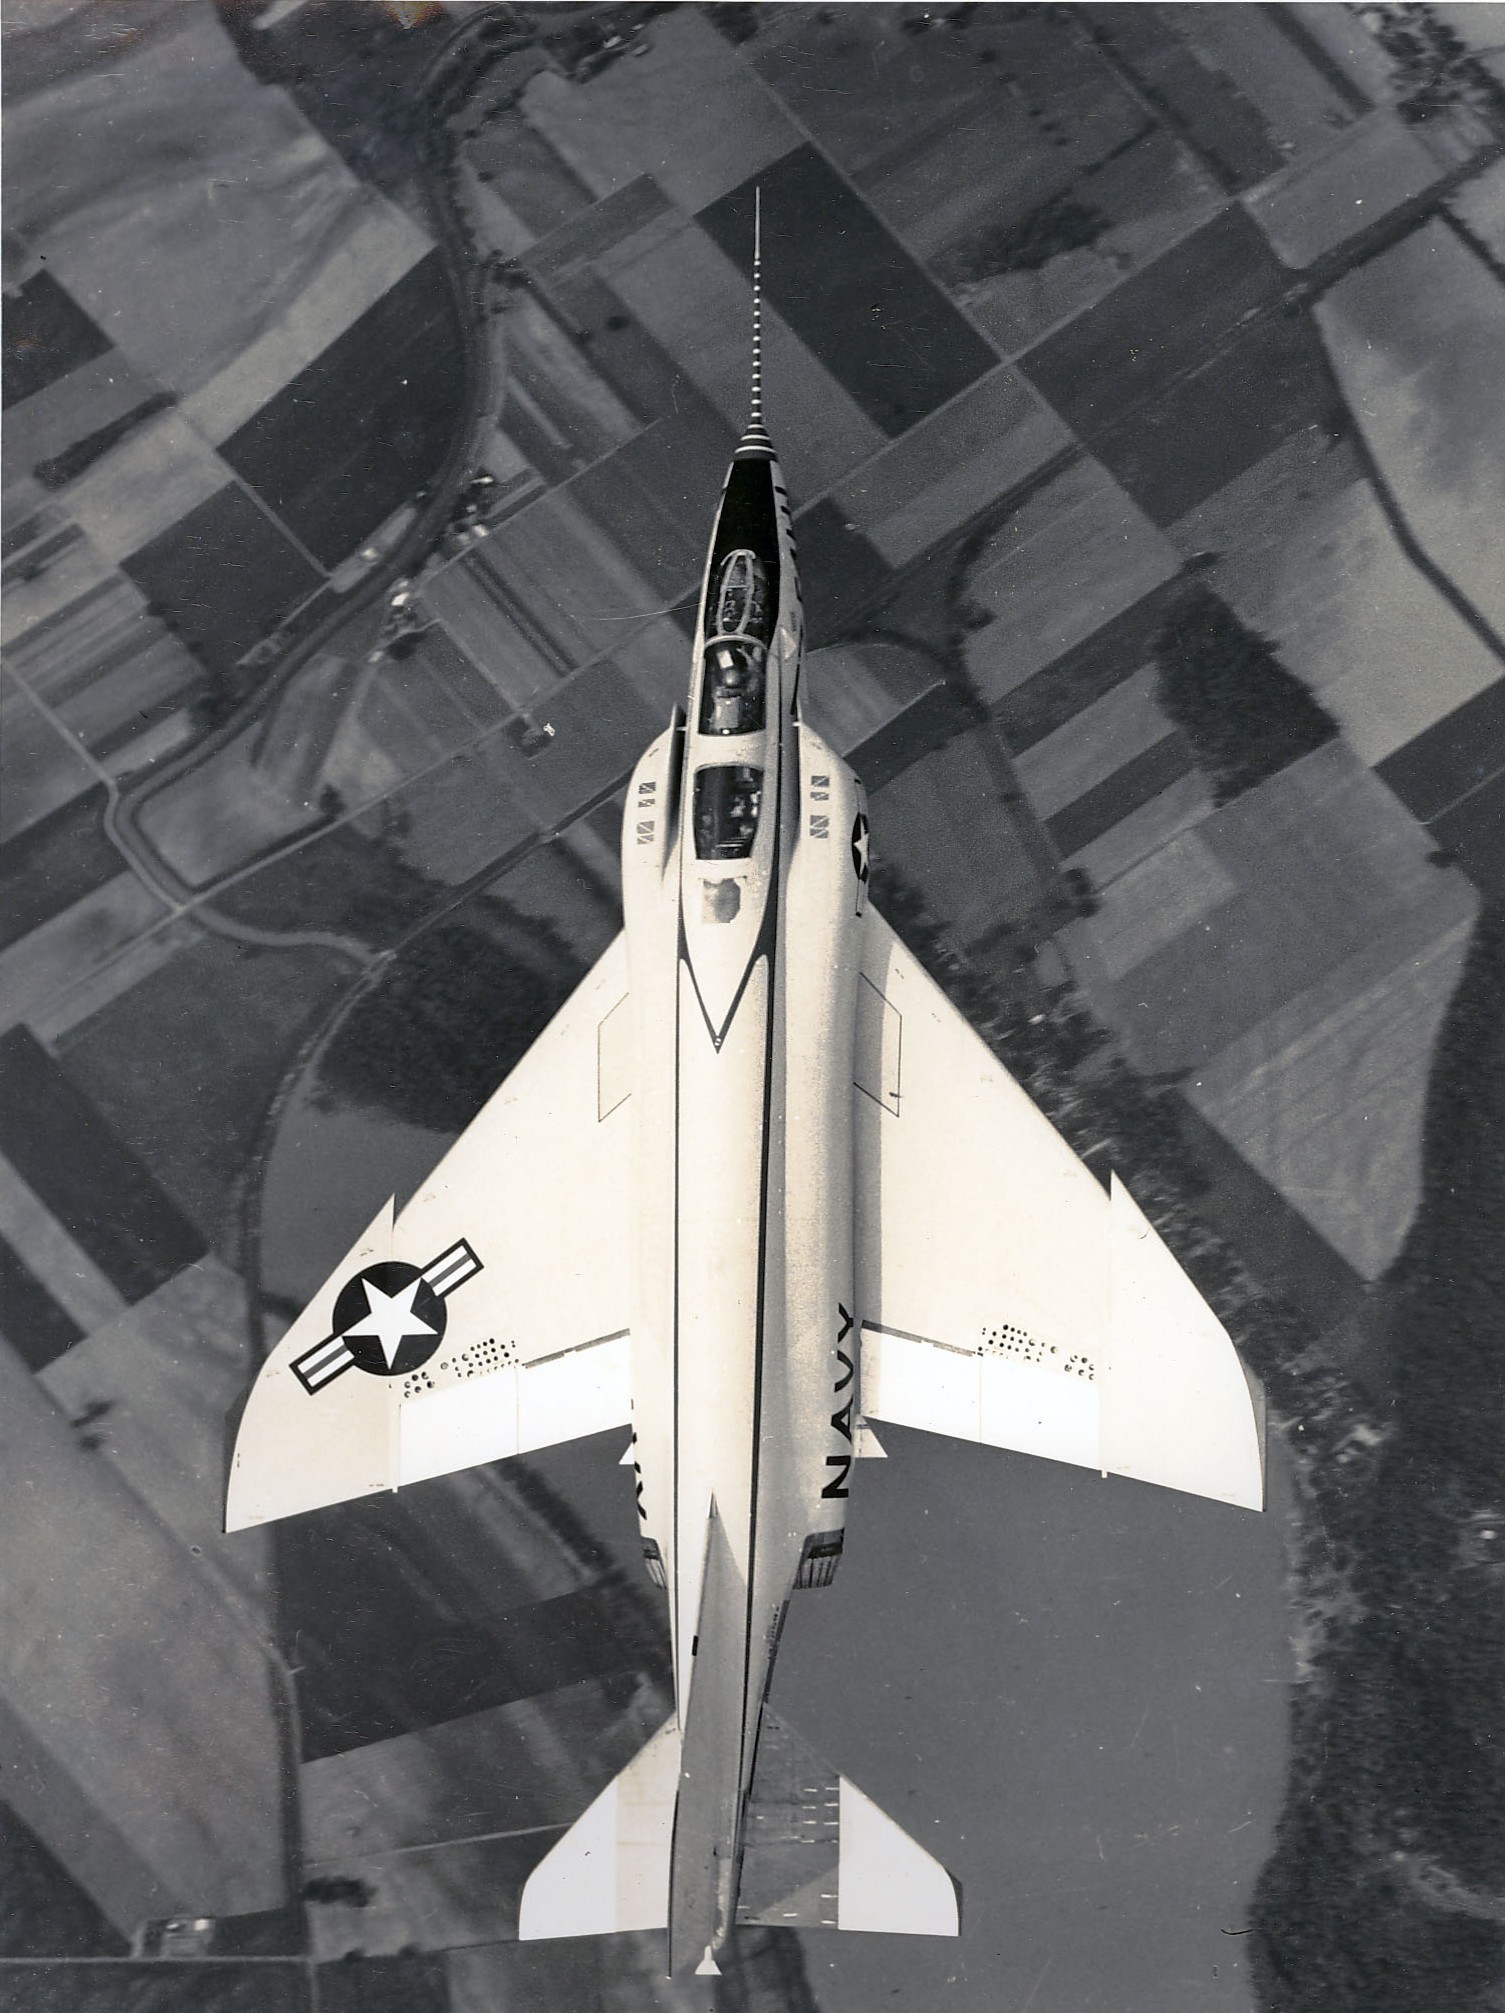 McDonnell YF4H-1 Phantom II Bu. No. 142259, seen from above. (U.S. Navy)